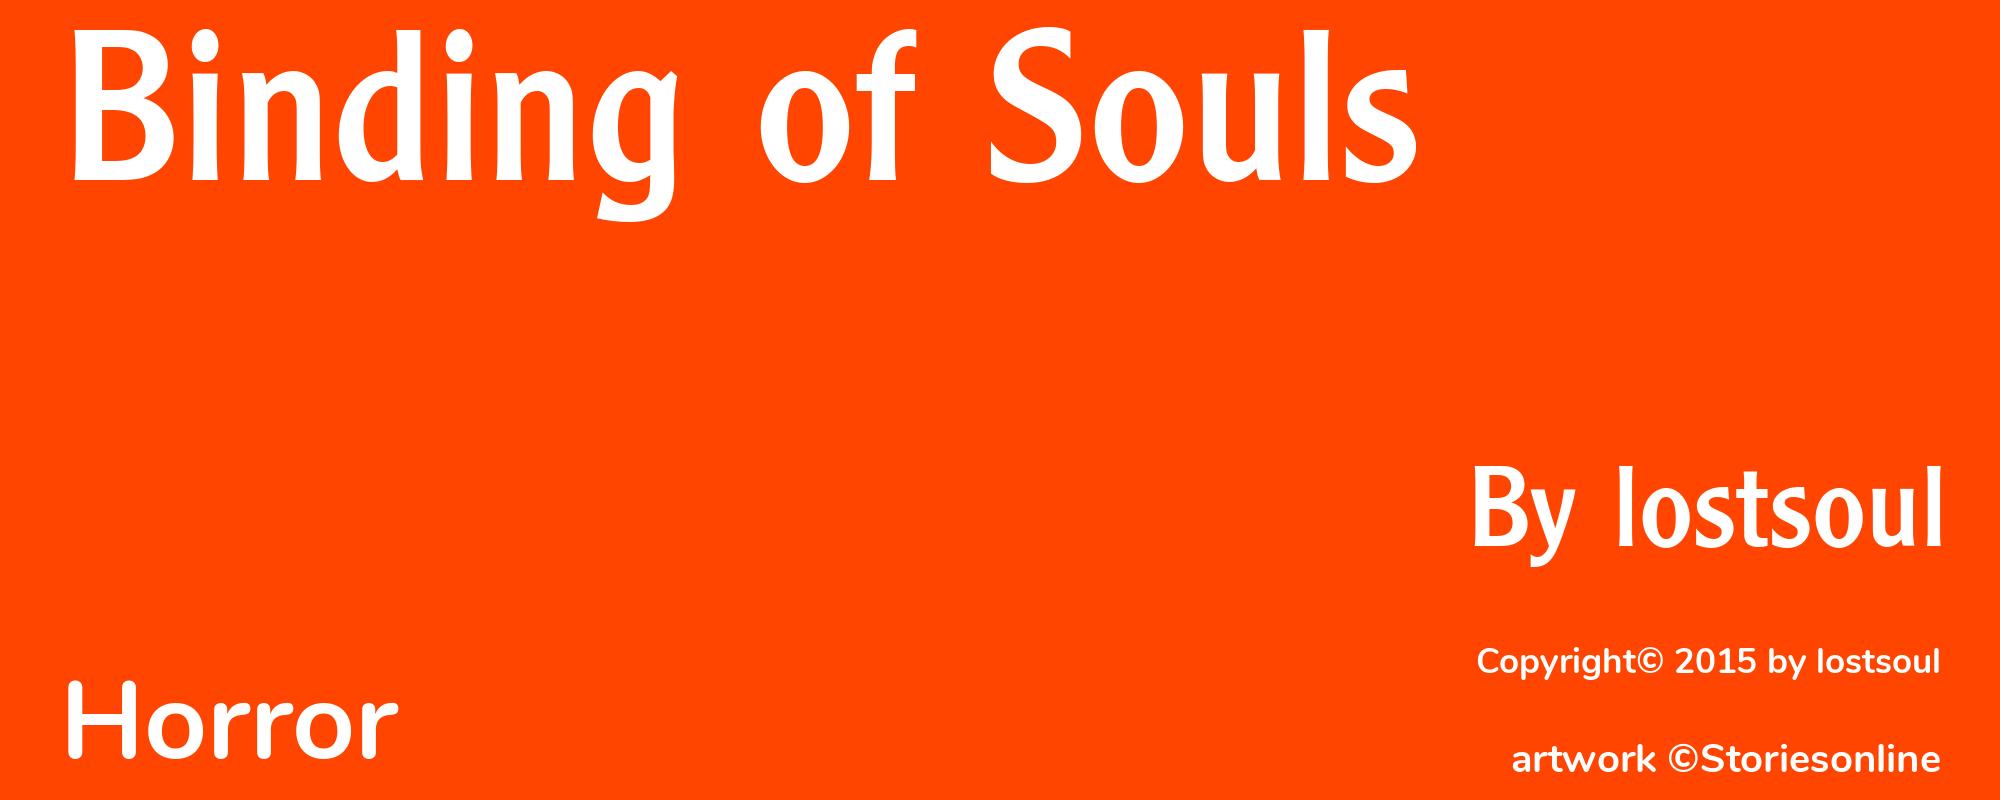 Binding of Souls - Cover